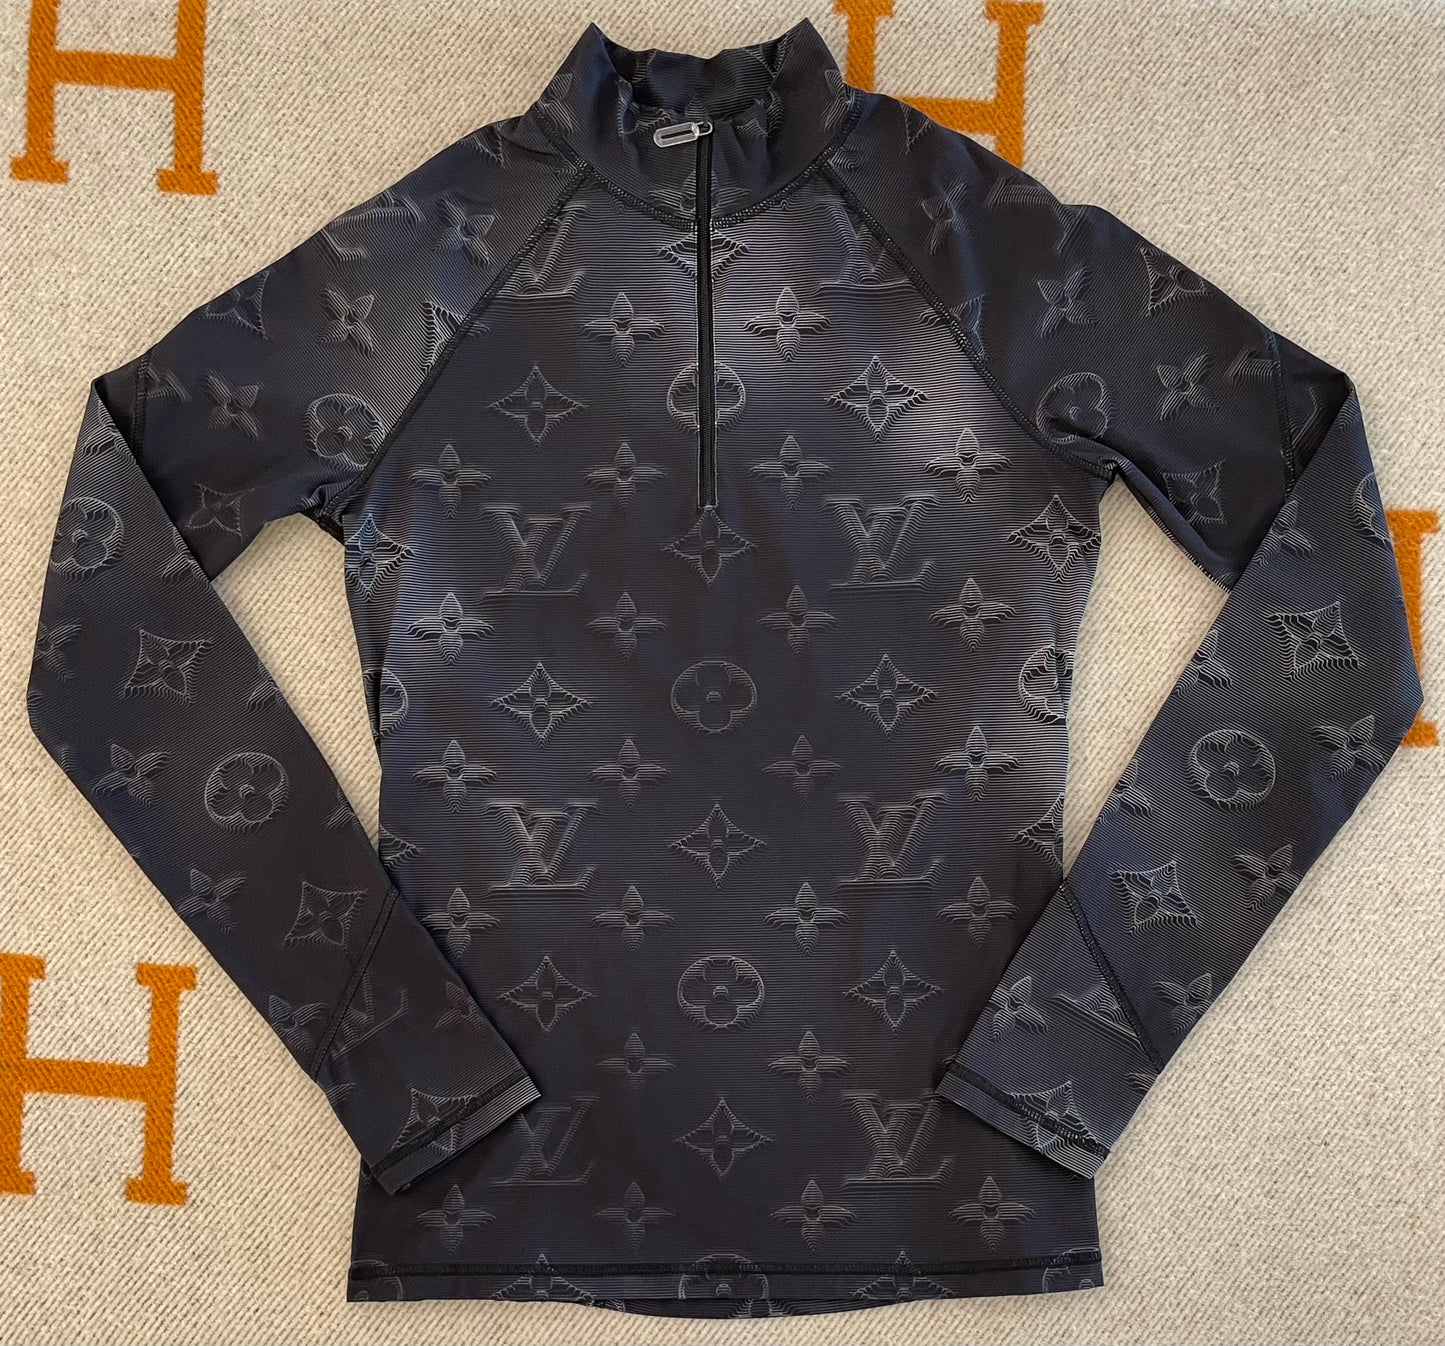 Louis Vuitton Monogram Technical Printed Half-Zip Long-sleeved Top, Black, Xs